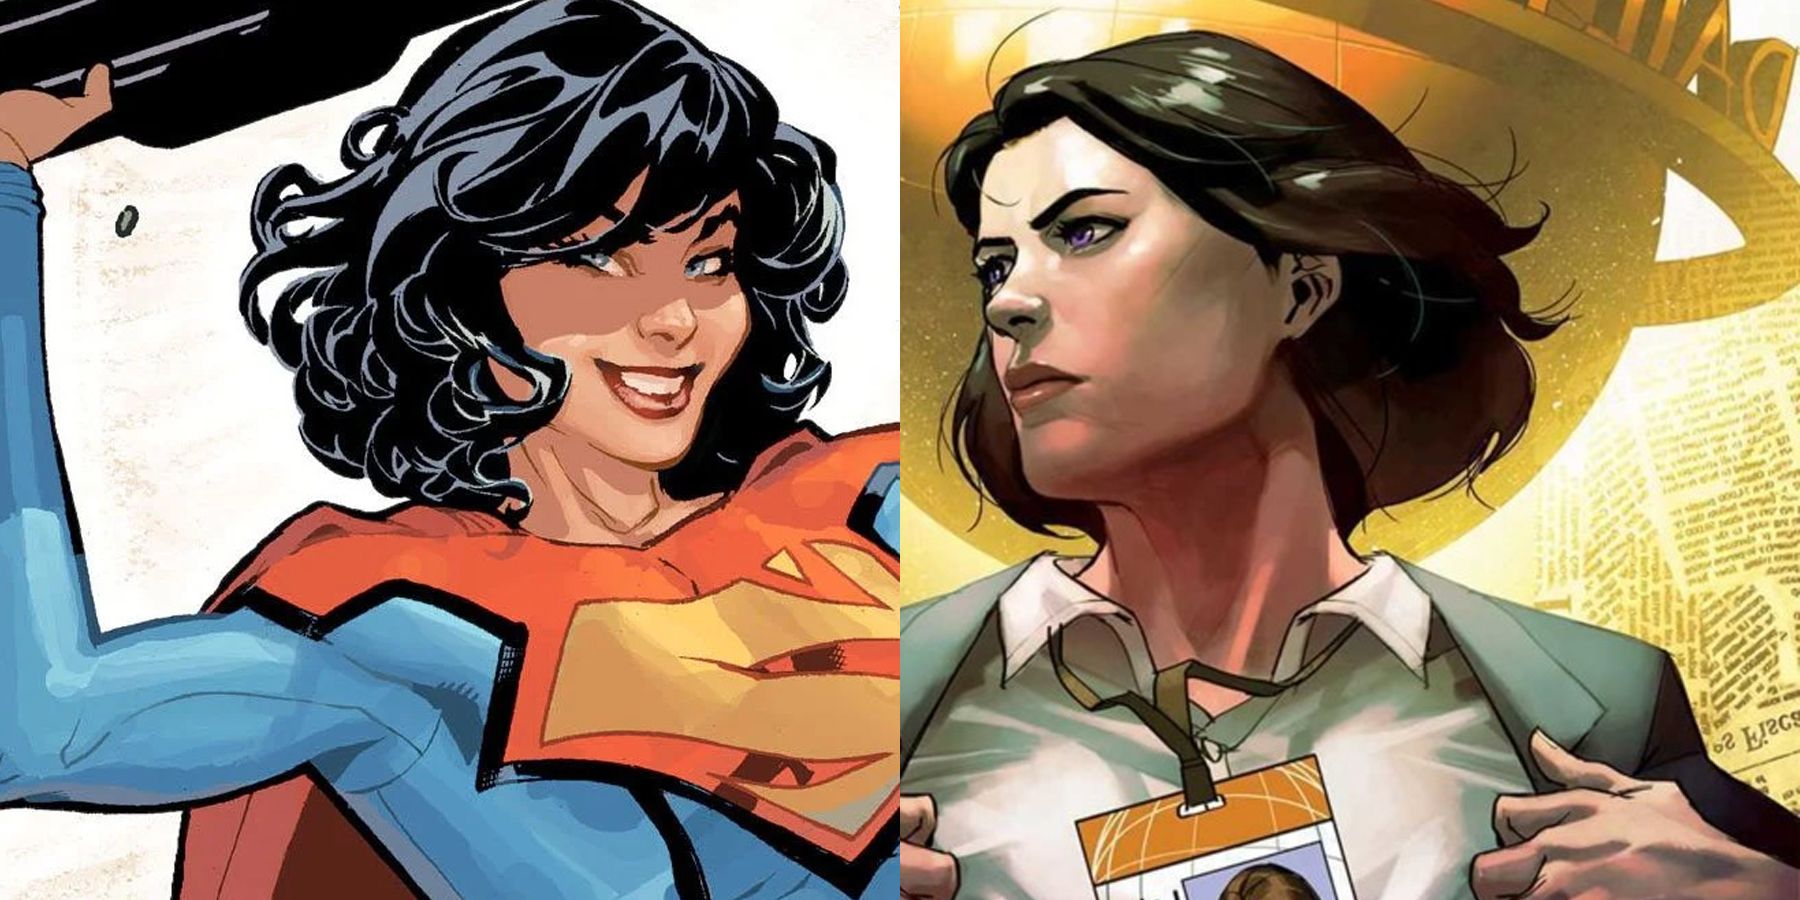 Man of Steel 2 Can Make Lois Lane Into Superwoman